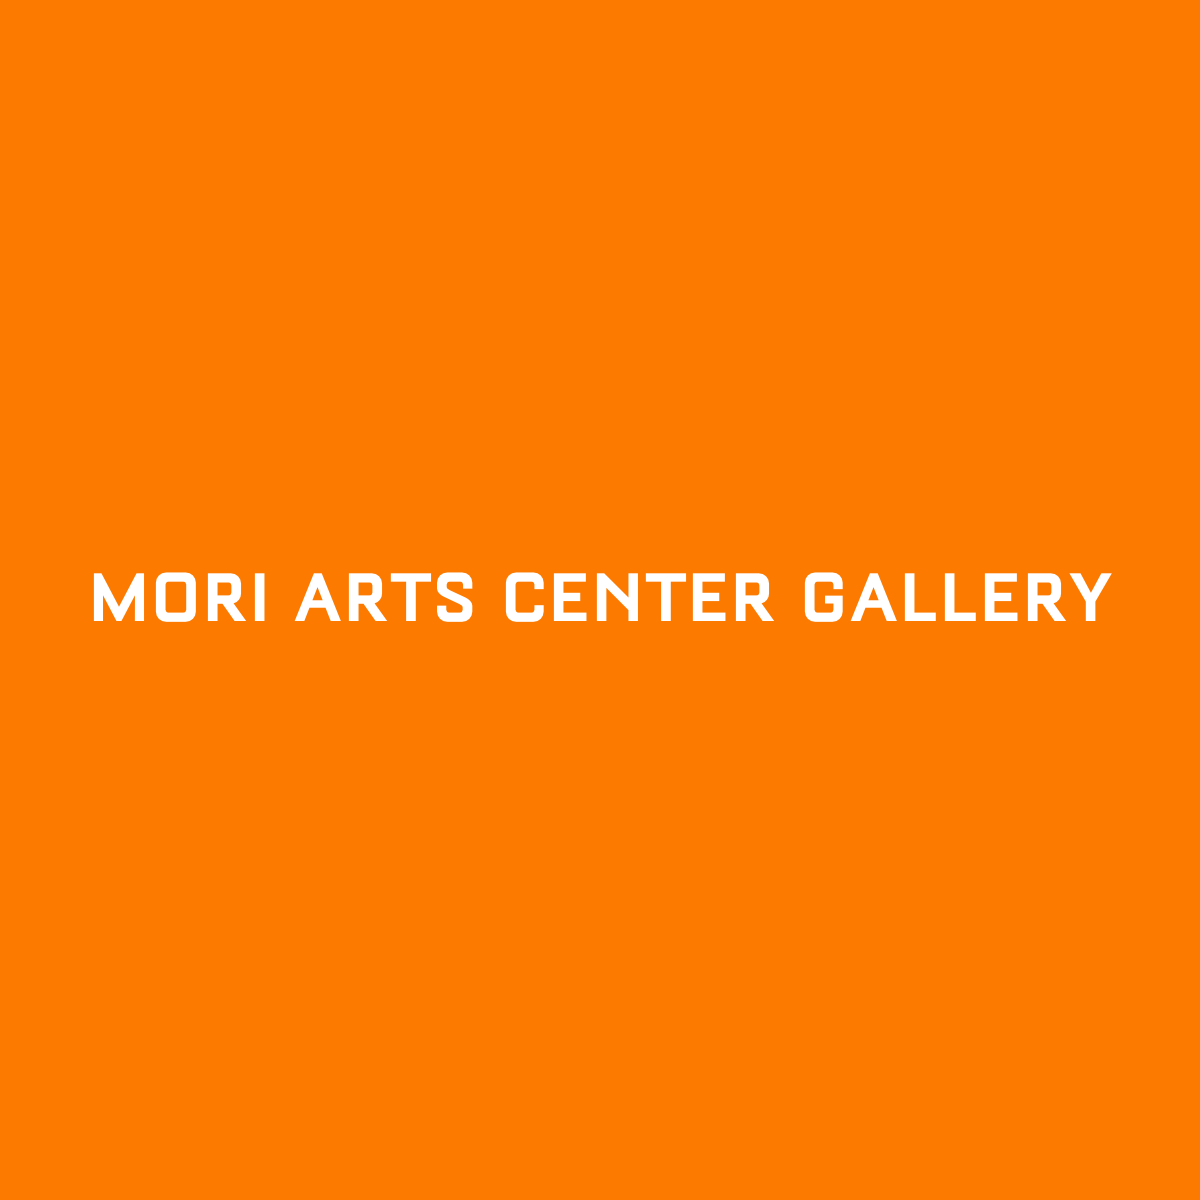 Mori Arts Center Gallery